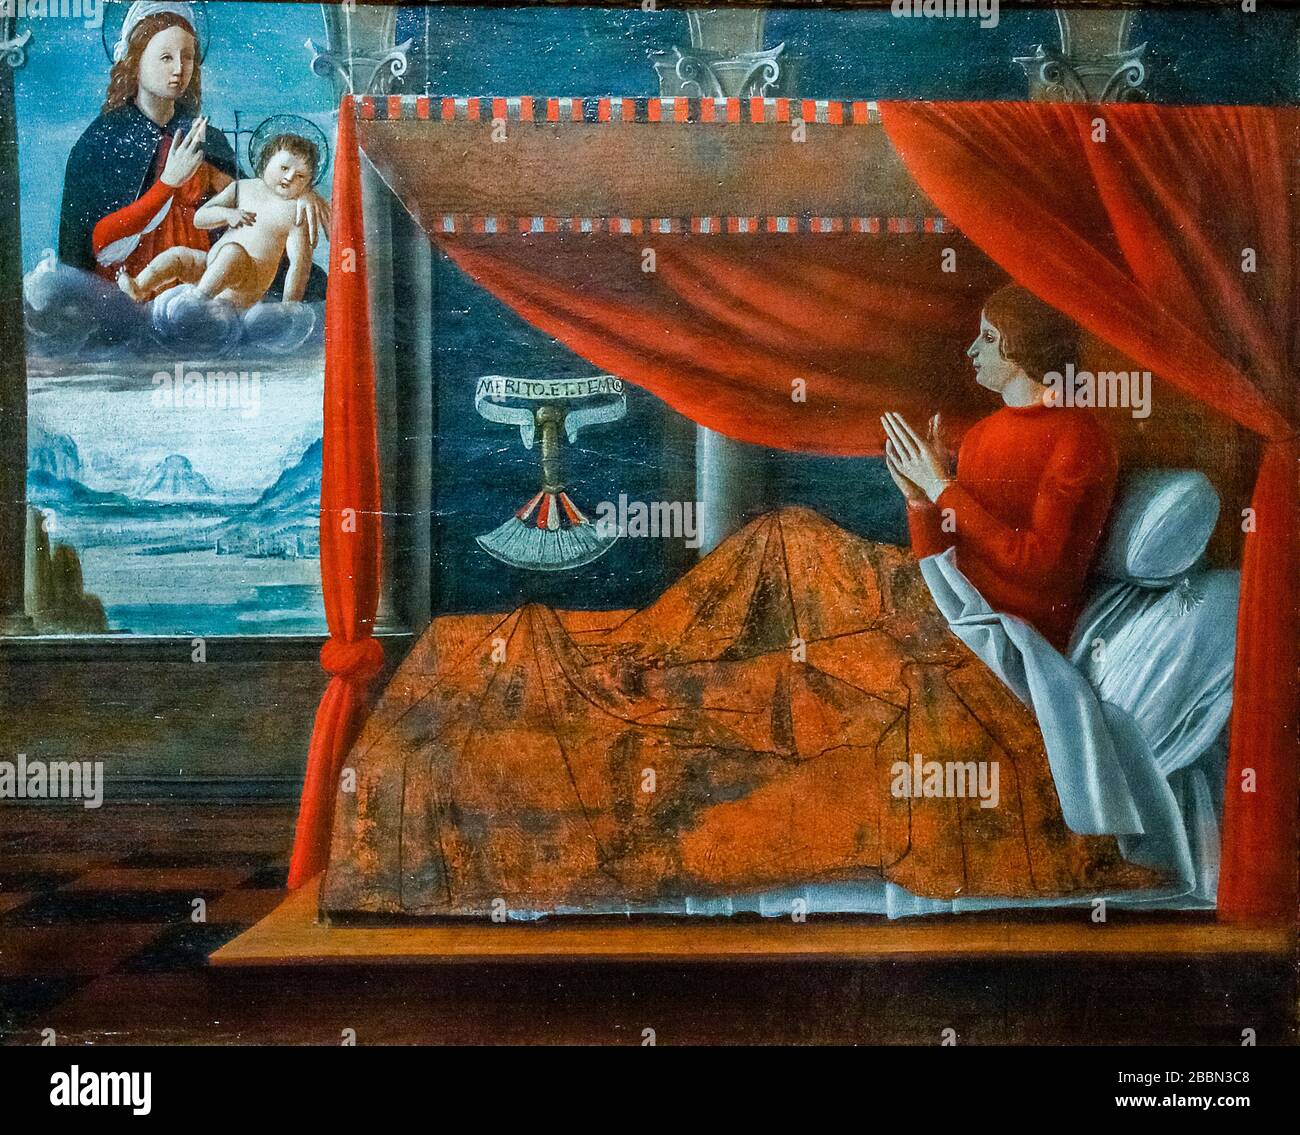 Italien Lombardei Mailand Poldi Pezzoli Museum - lombardischer Maler 16. Jahrhundert - Lodovico il Moro im Bett ruft die Madonna mit dem Kind auf Stockfoto